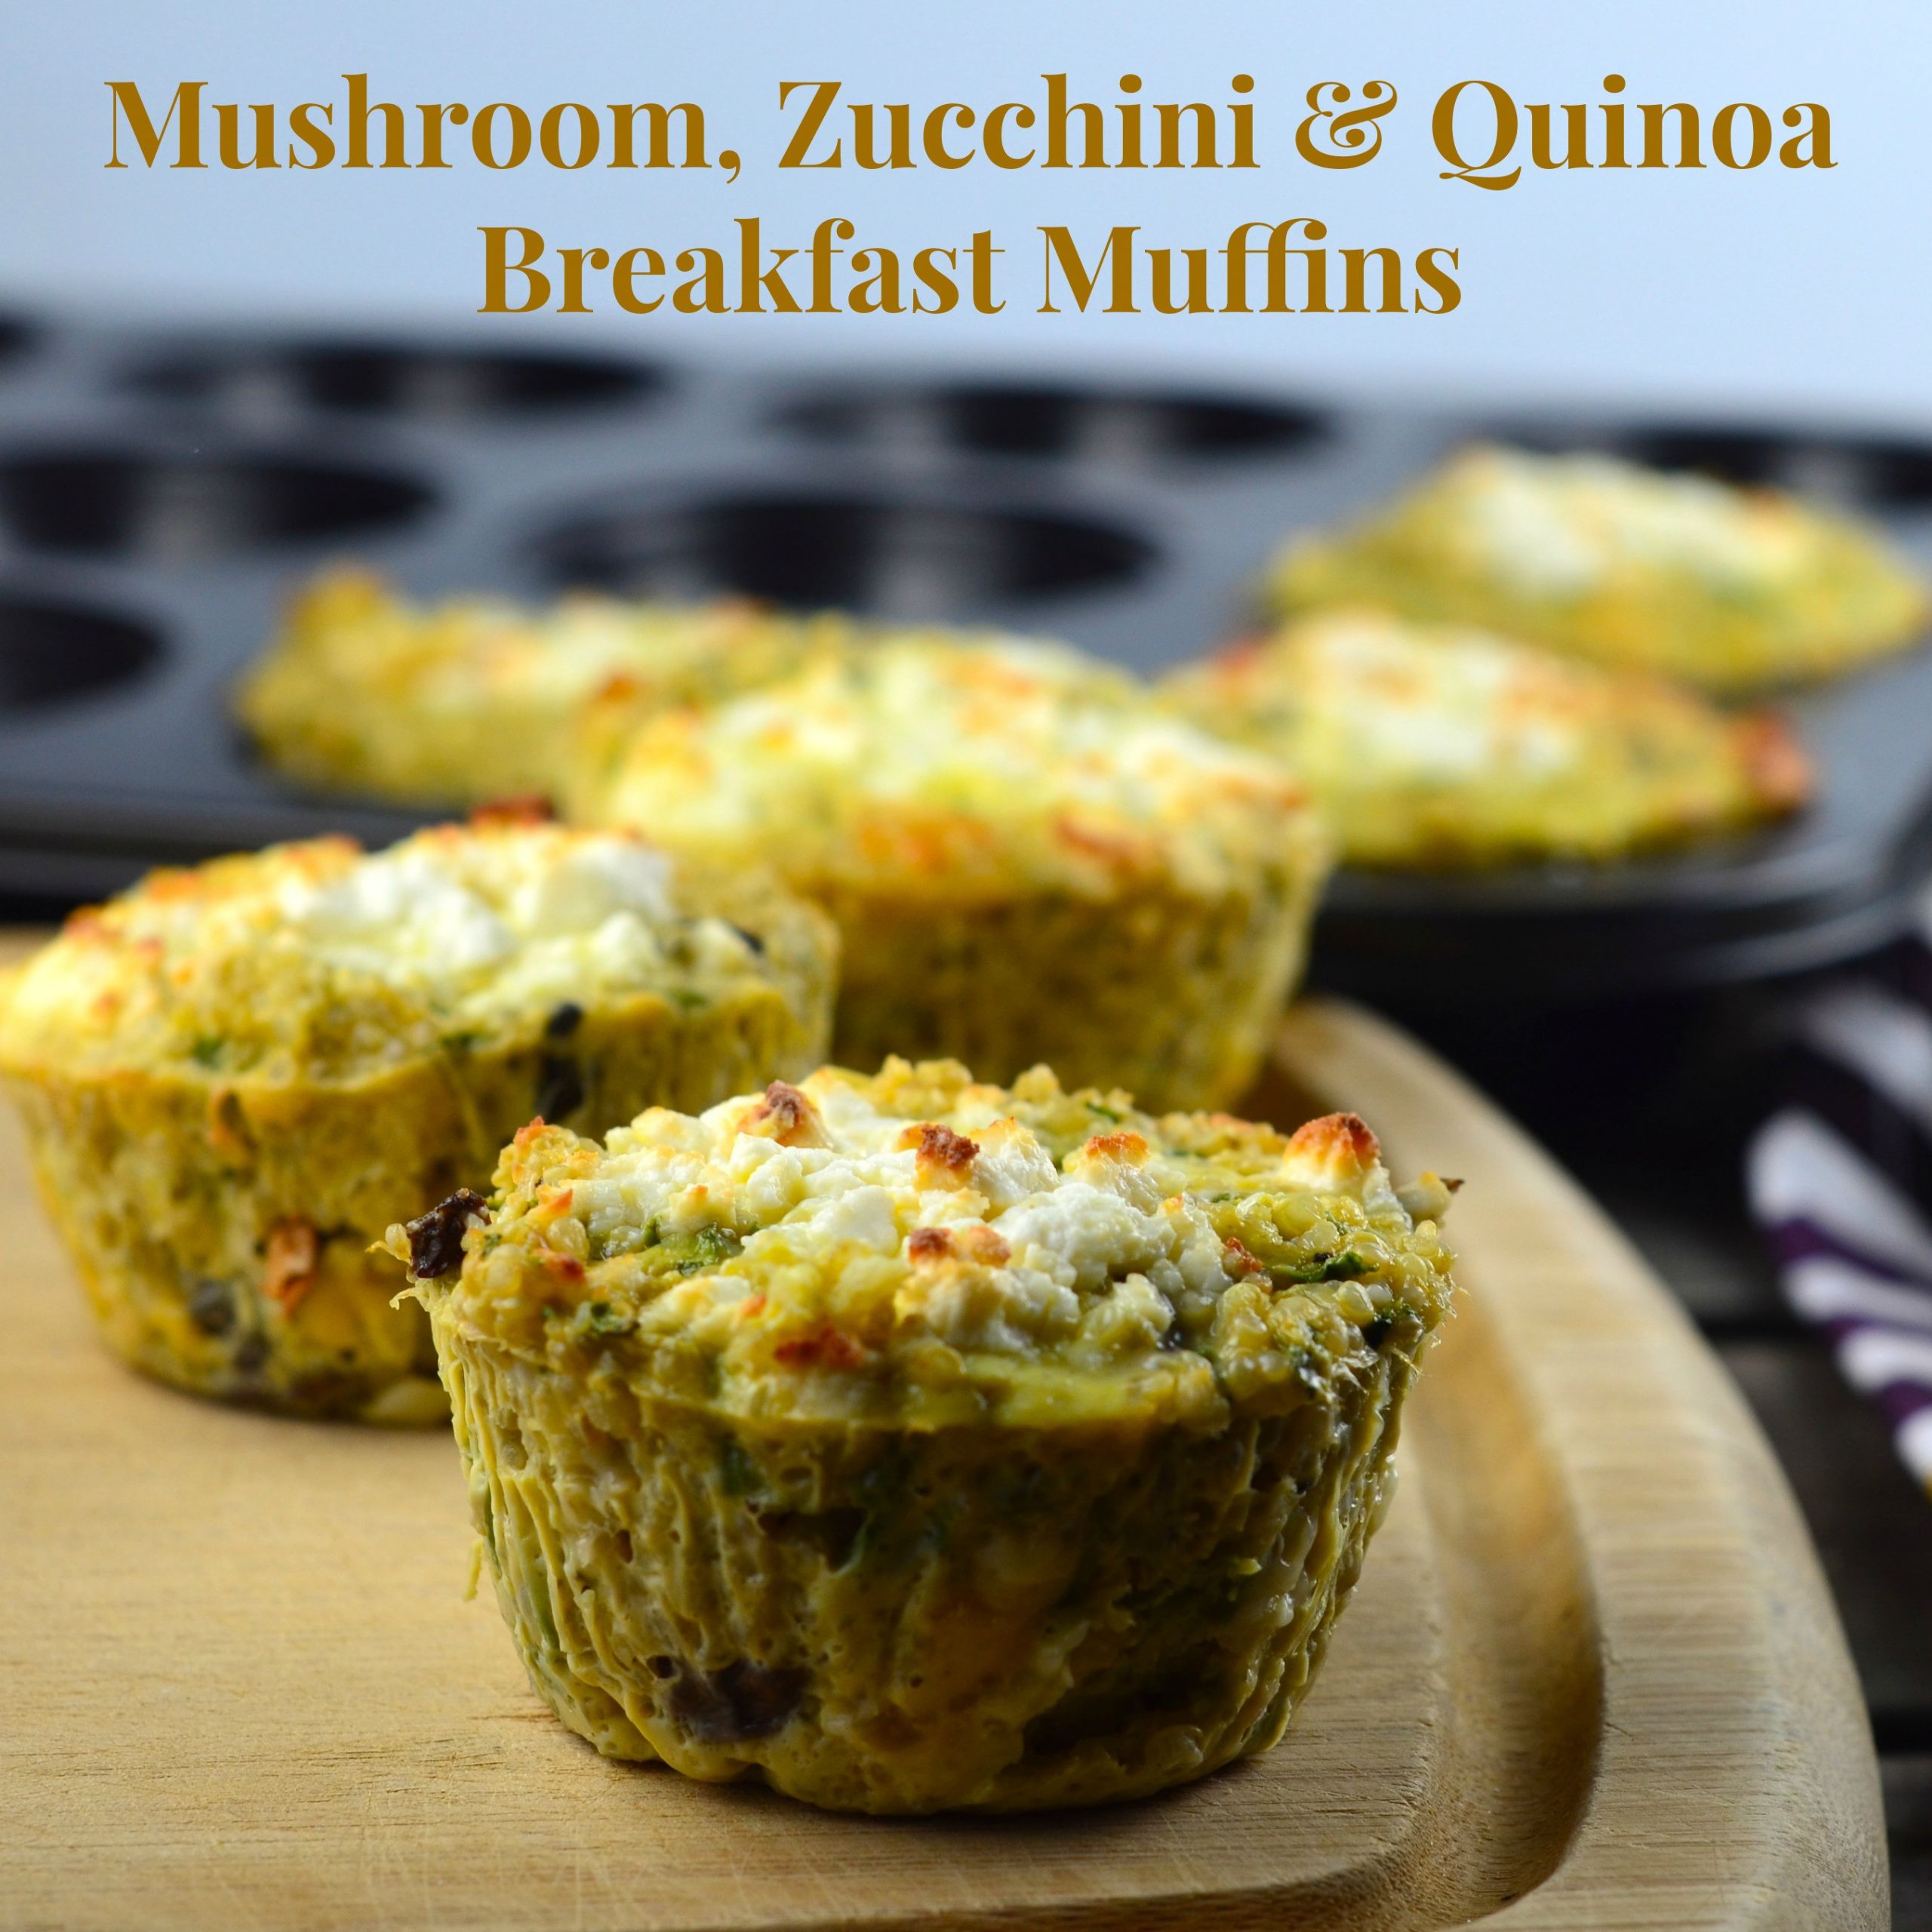 Passover Muffins Recipe
 Passover Recipes Mushroom Zucchini & Quinoa Breakfast